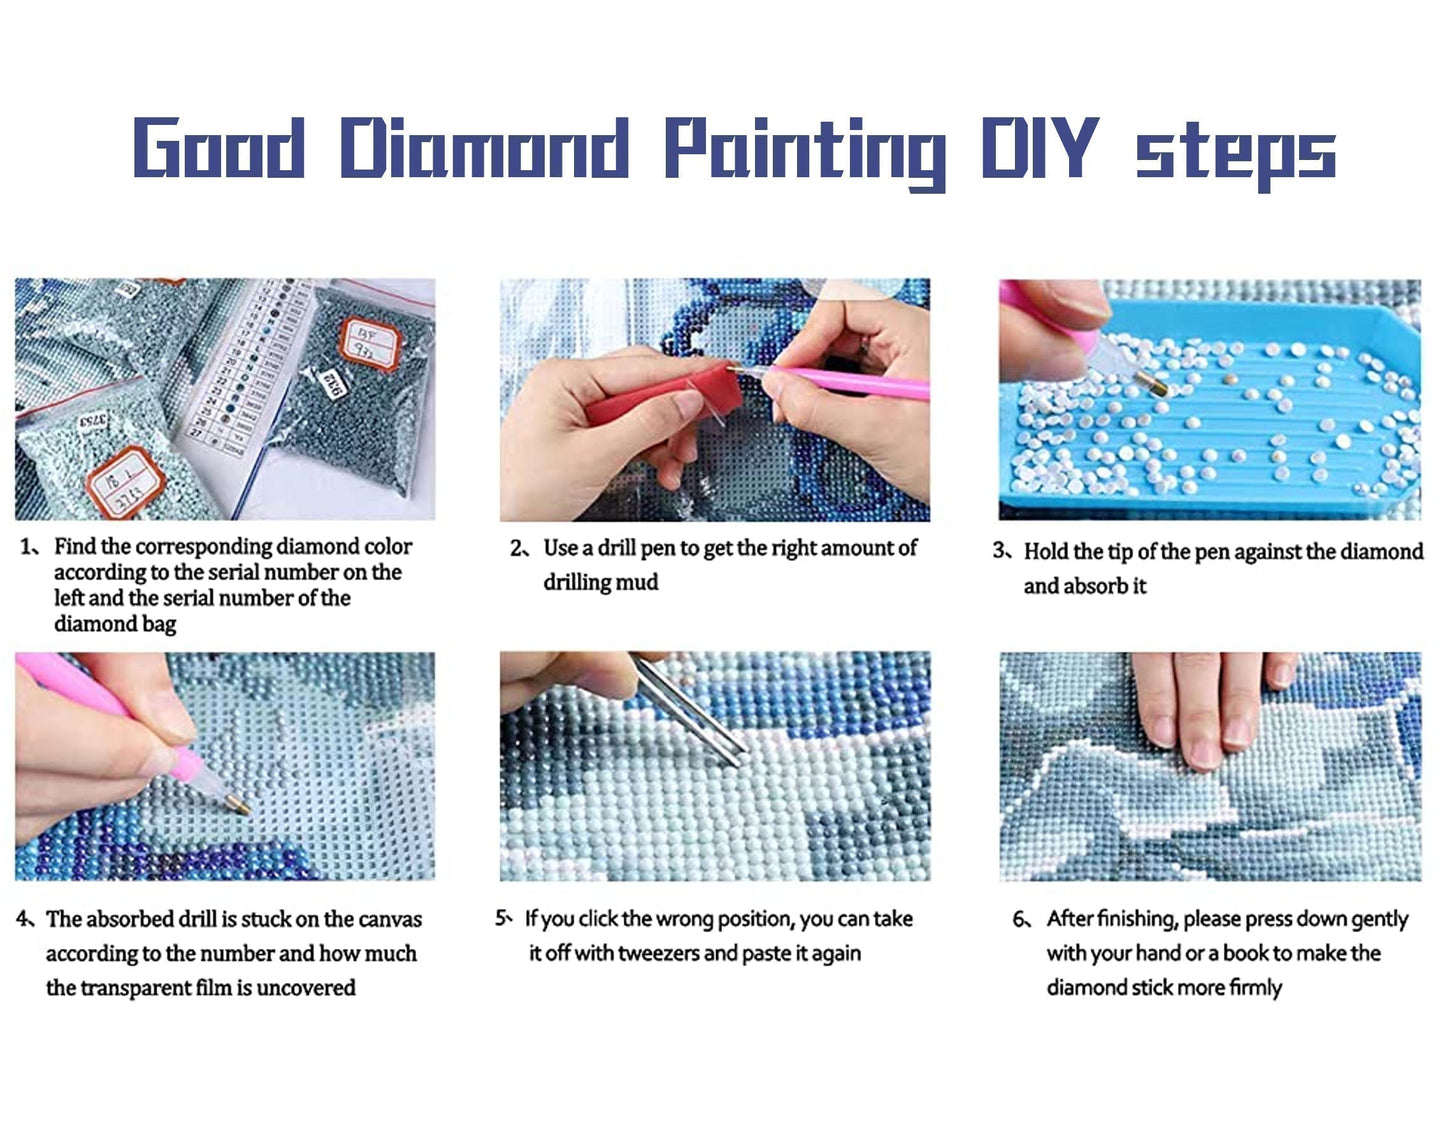 Bills | Full Round/Square Diamond Painting Kits | 30x80cm